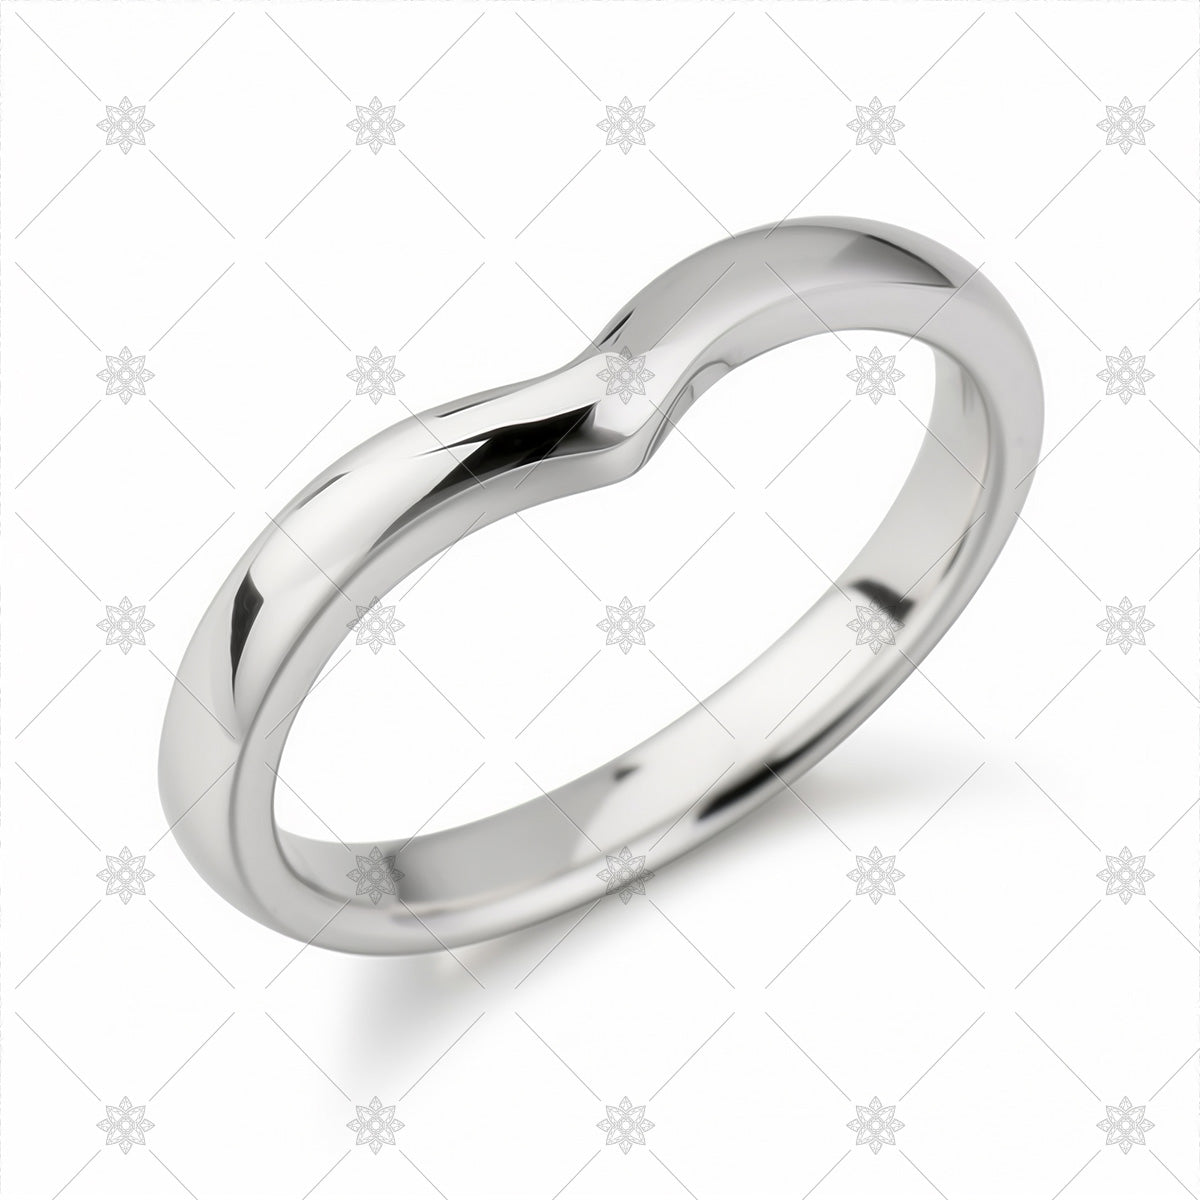 V-Shaped Diamond Ring in 14k White Gold » Long Island, NY Jewelry Store